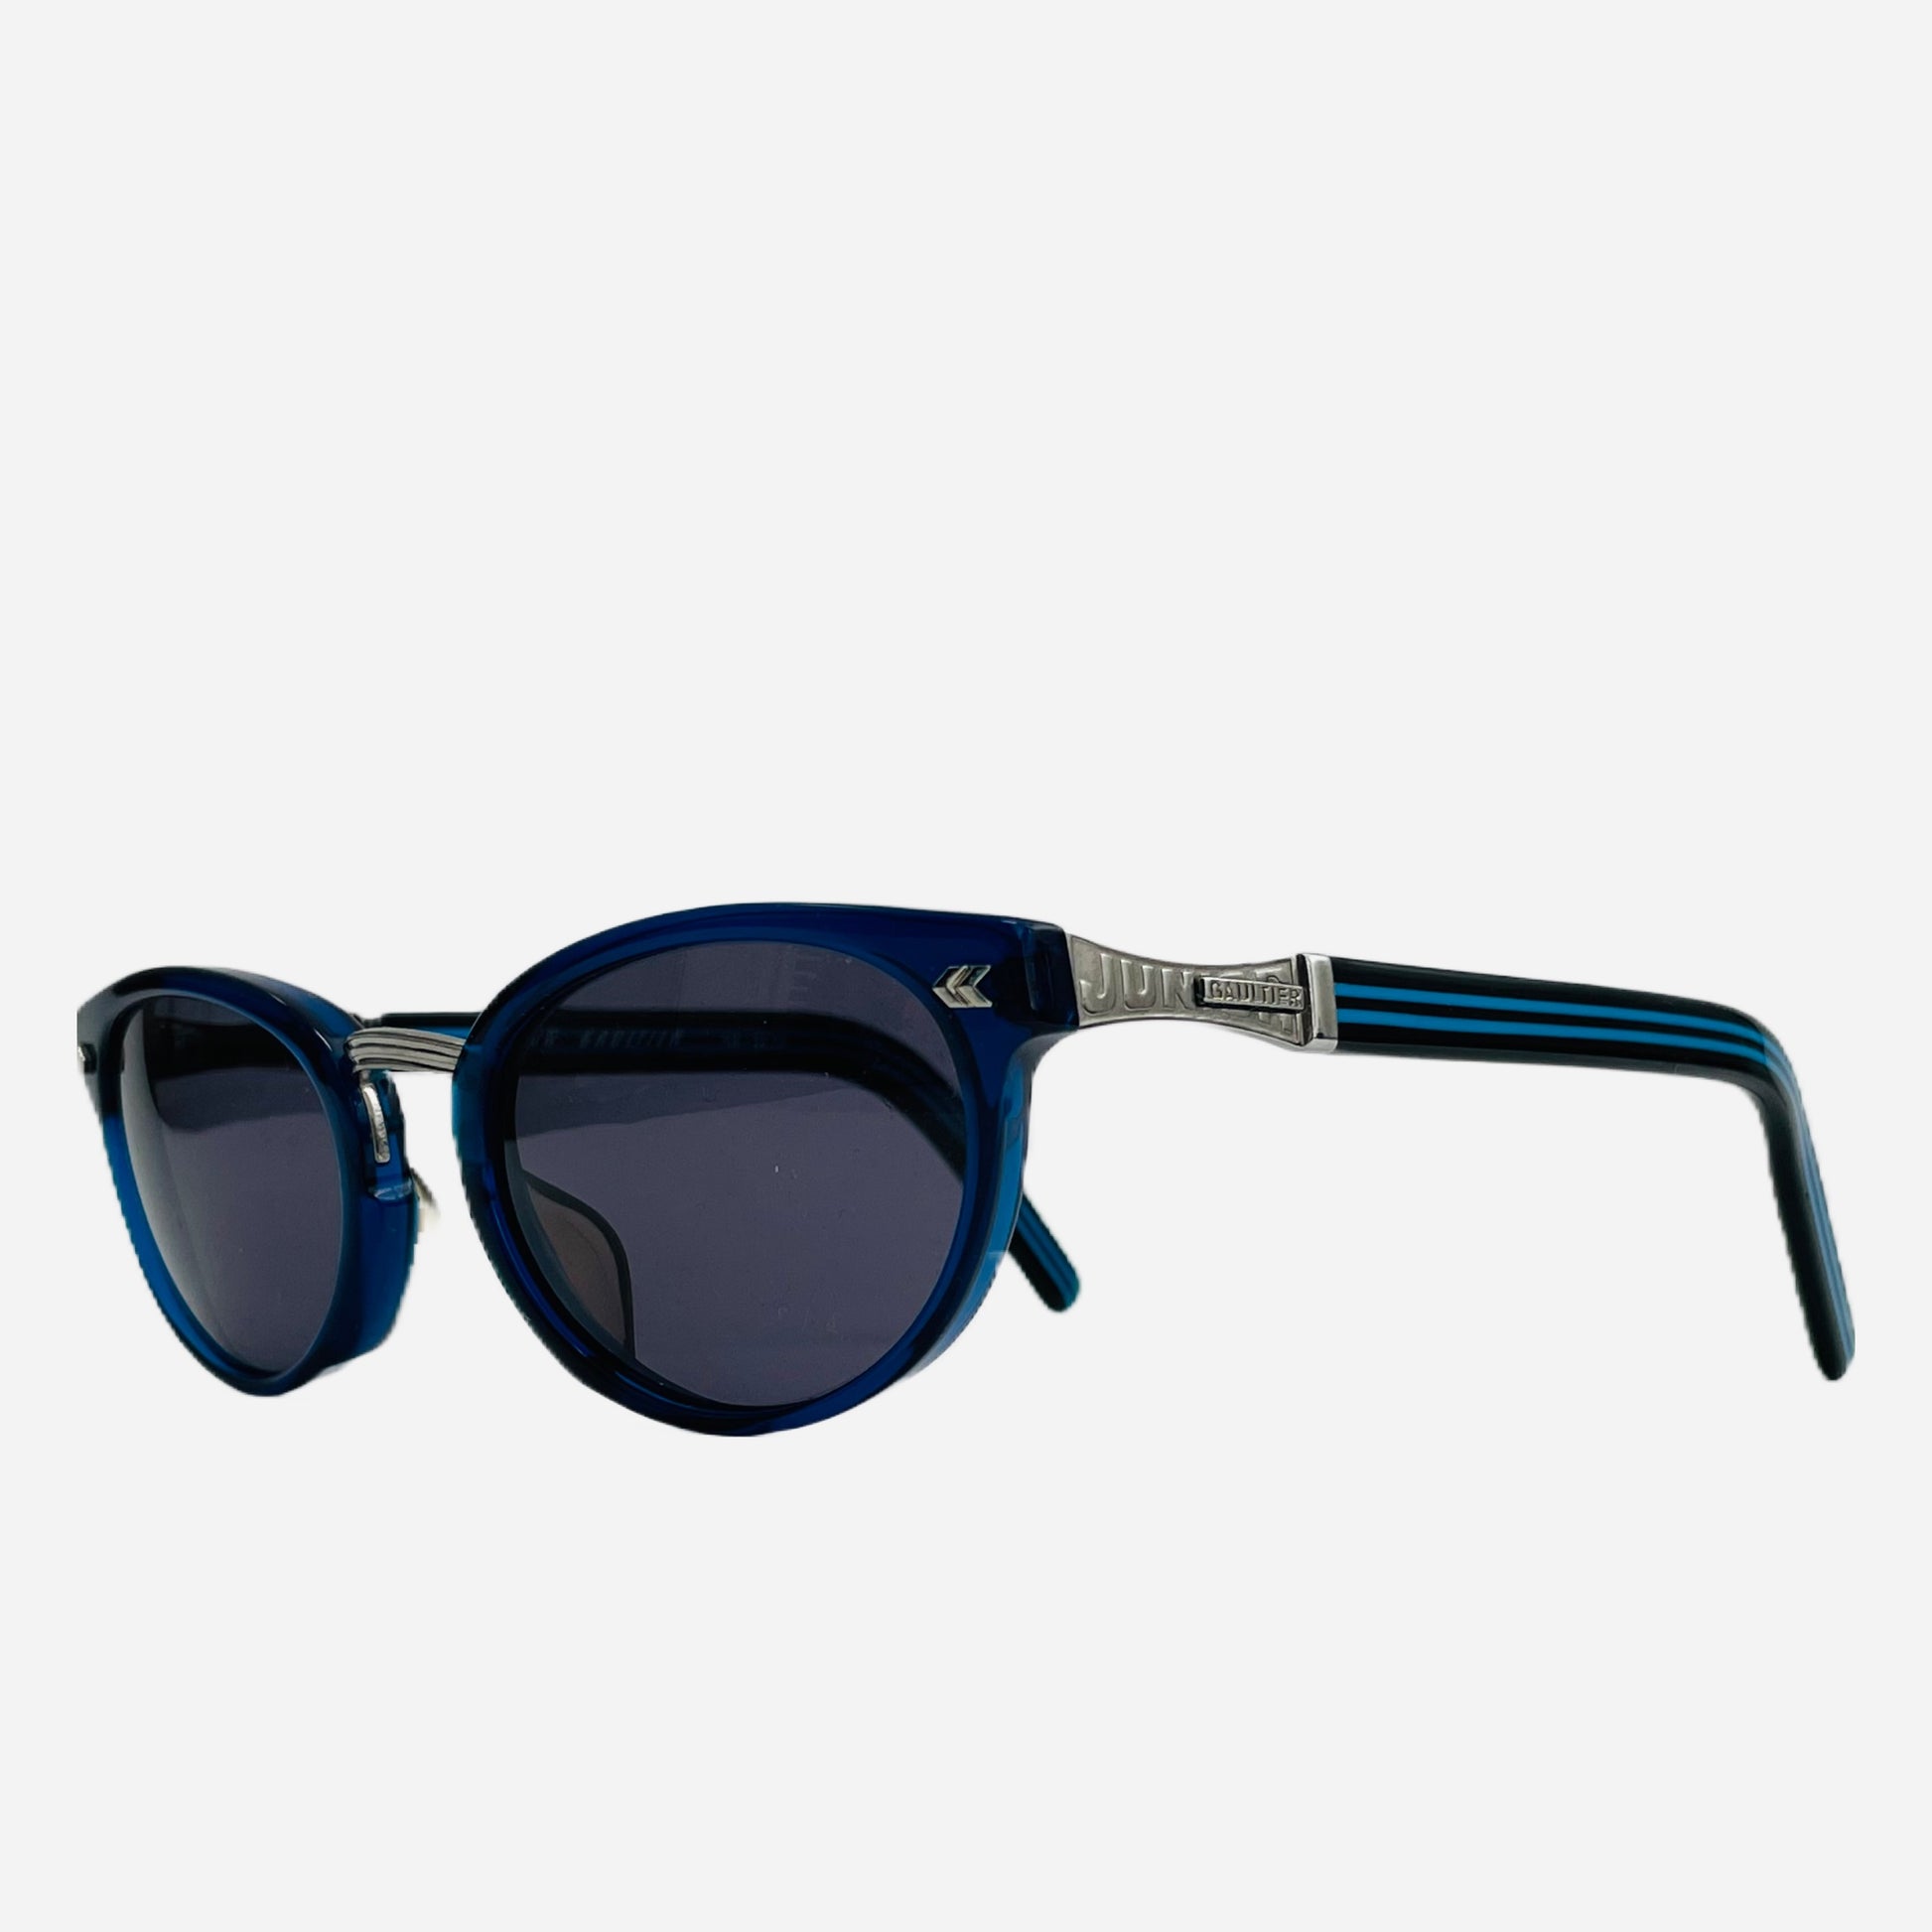 Jean-Paul-Gaultier-Junior-Gaultier-Sonnenbrille-Sunglasses-Modell-58-1272-the-seekers-vintage-designer-sunglasses-front-side